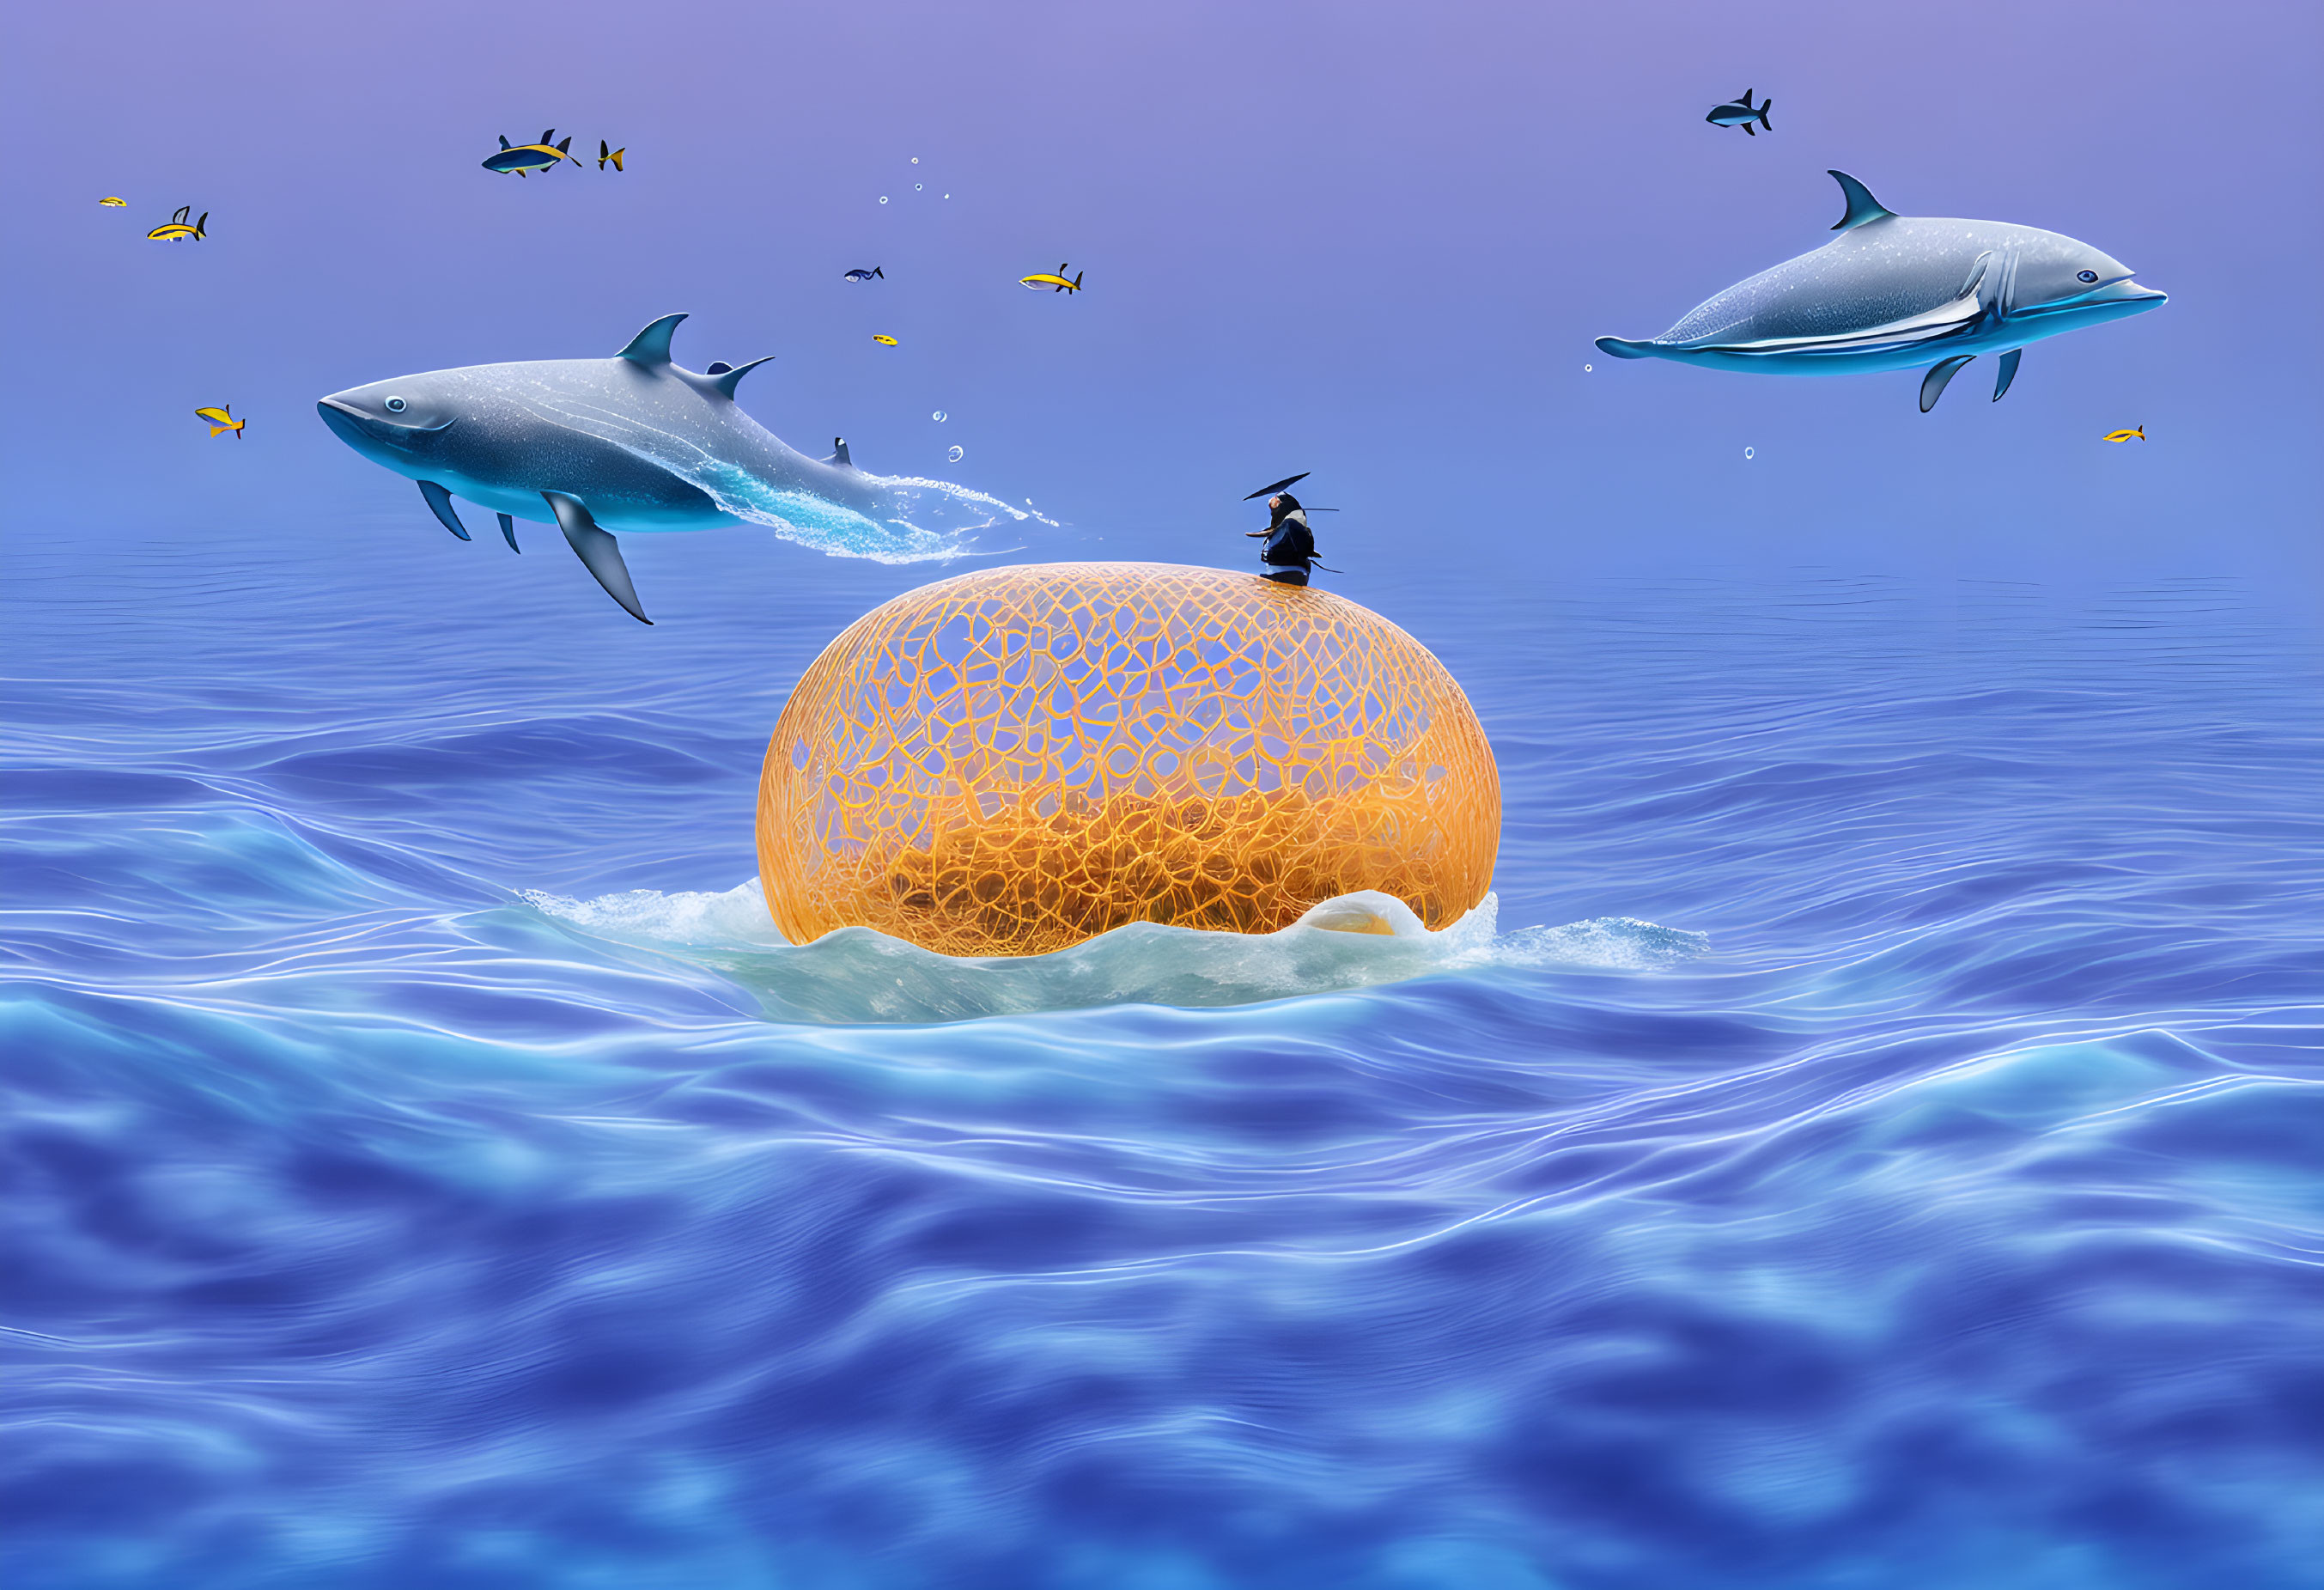 Citrus Serenity: Underwater Delight